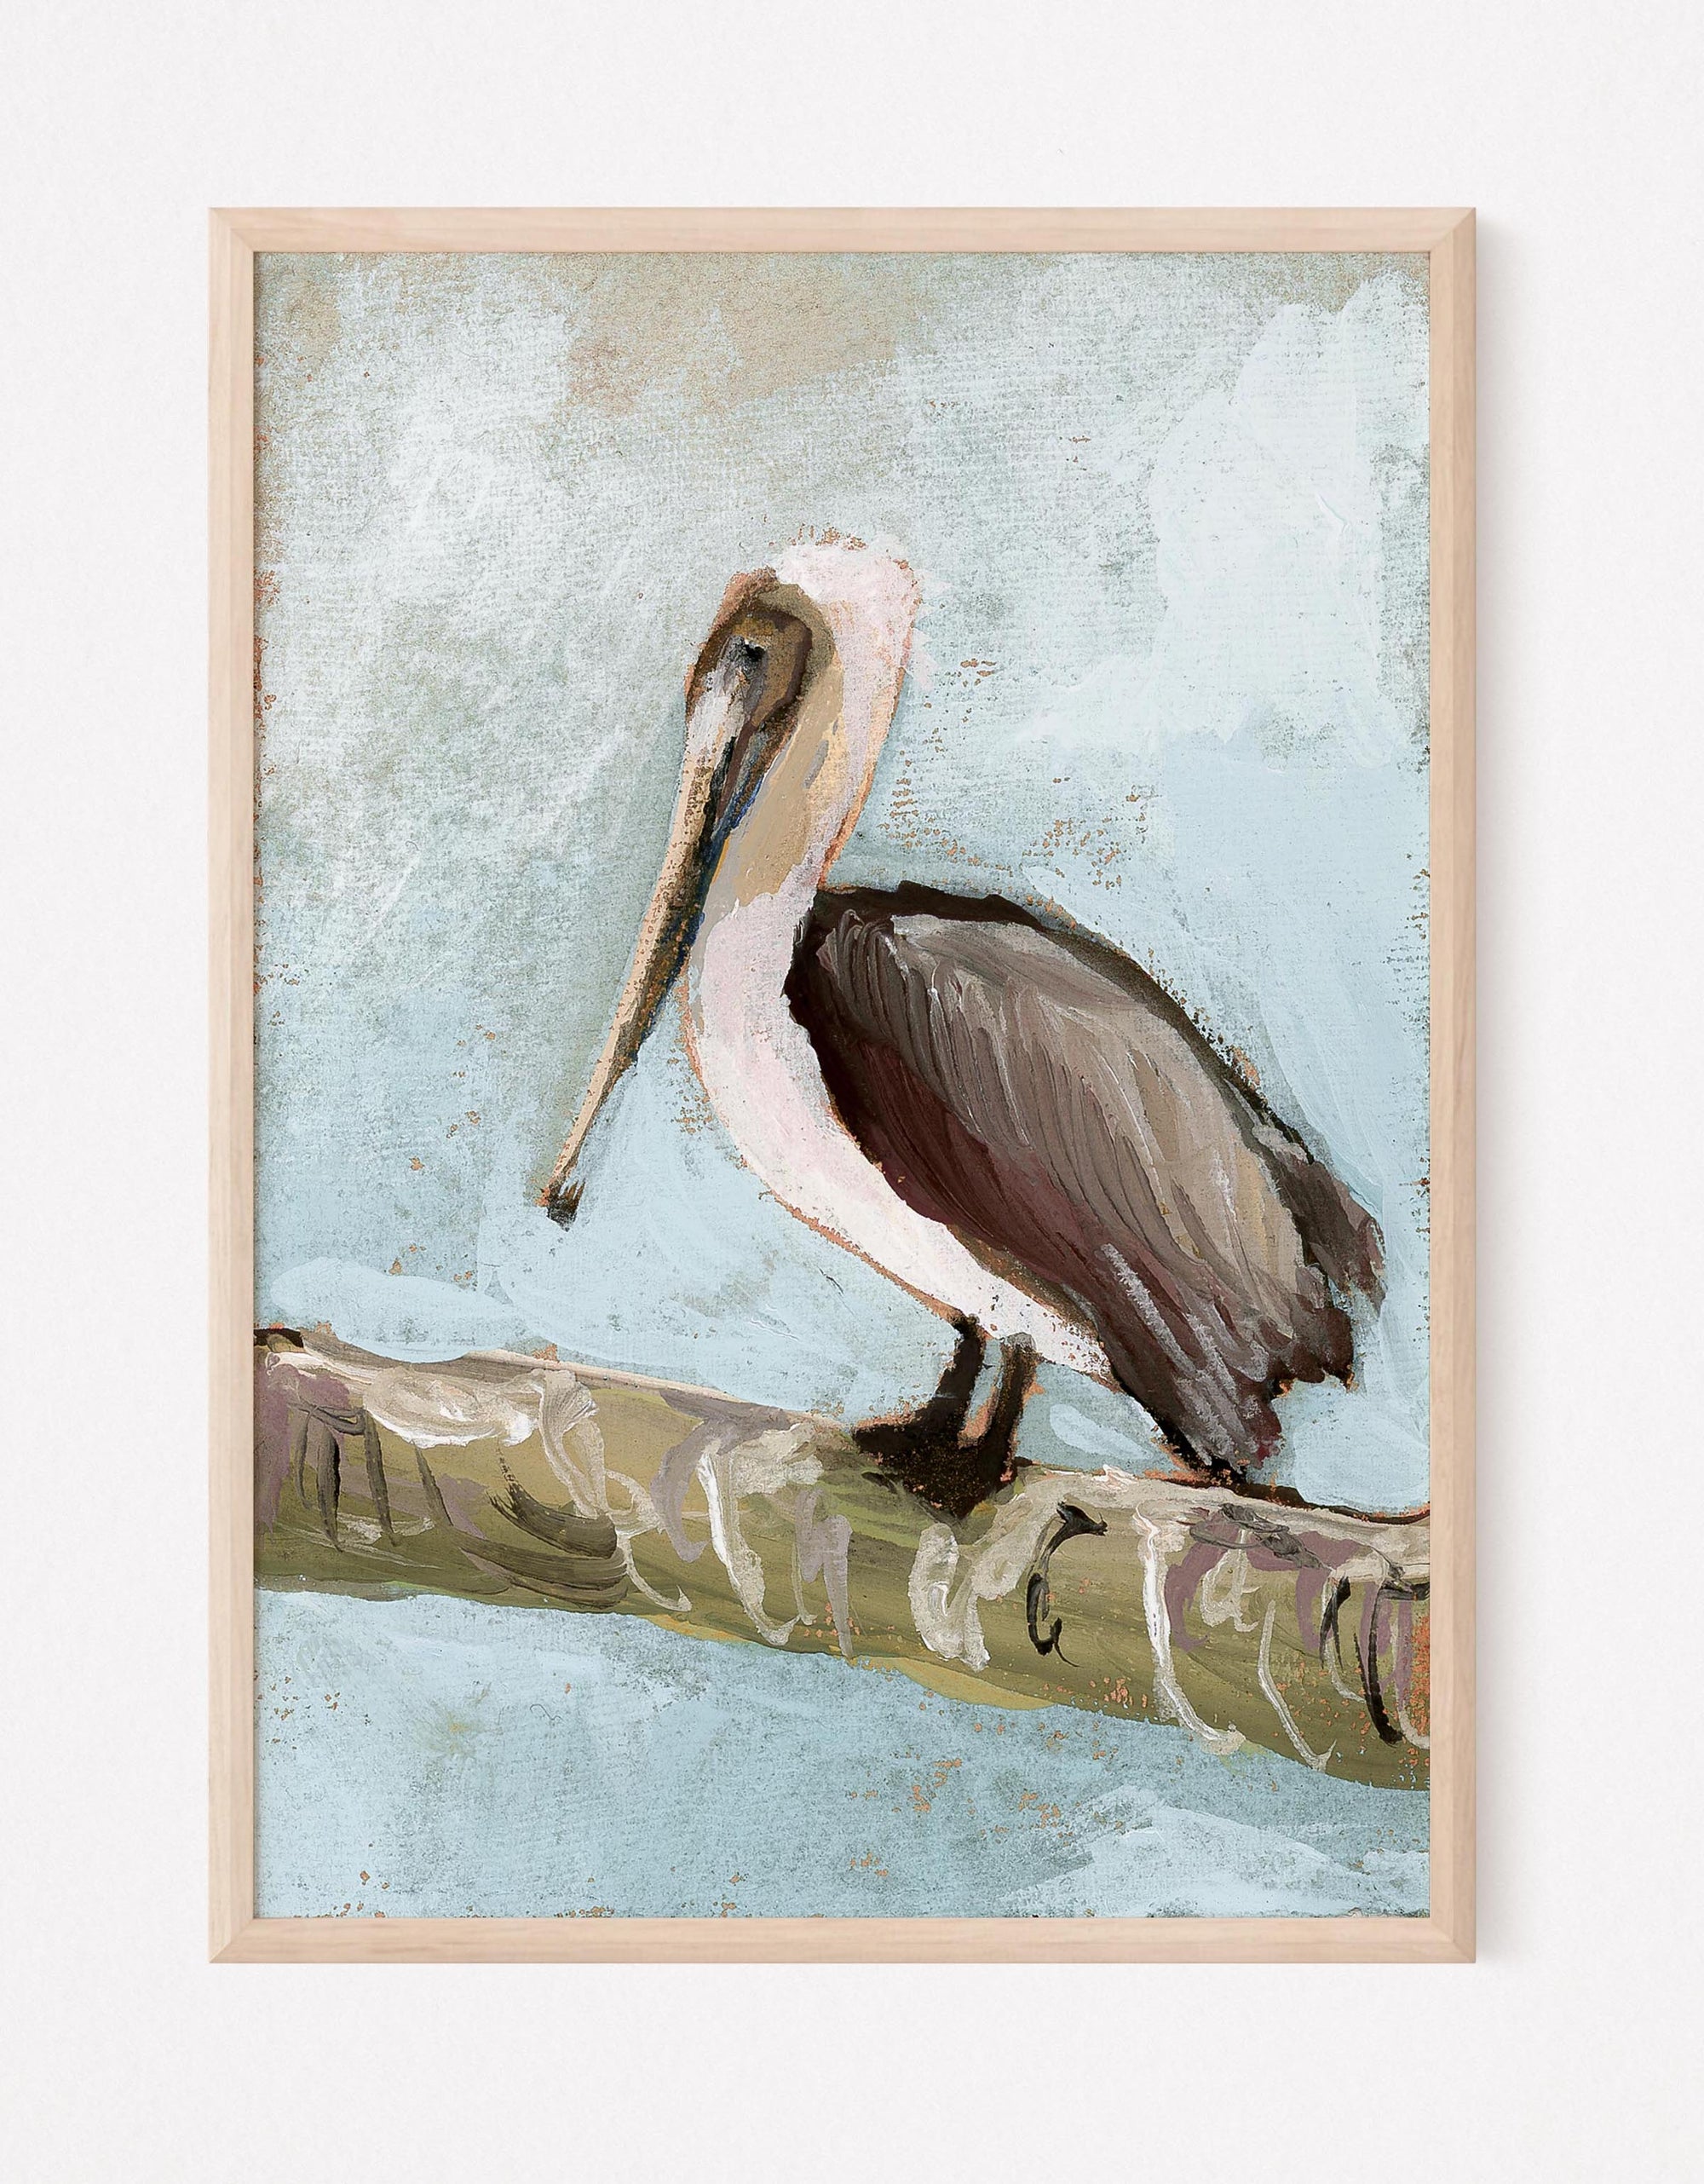 Leroy, a Pelican Vertical Print